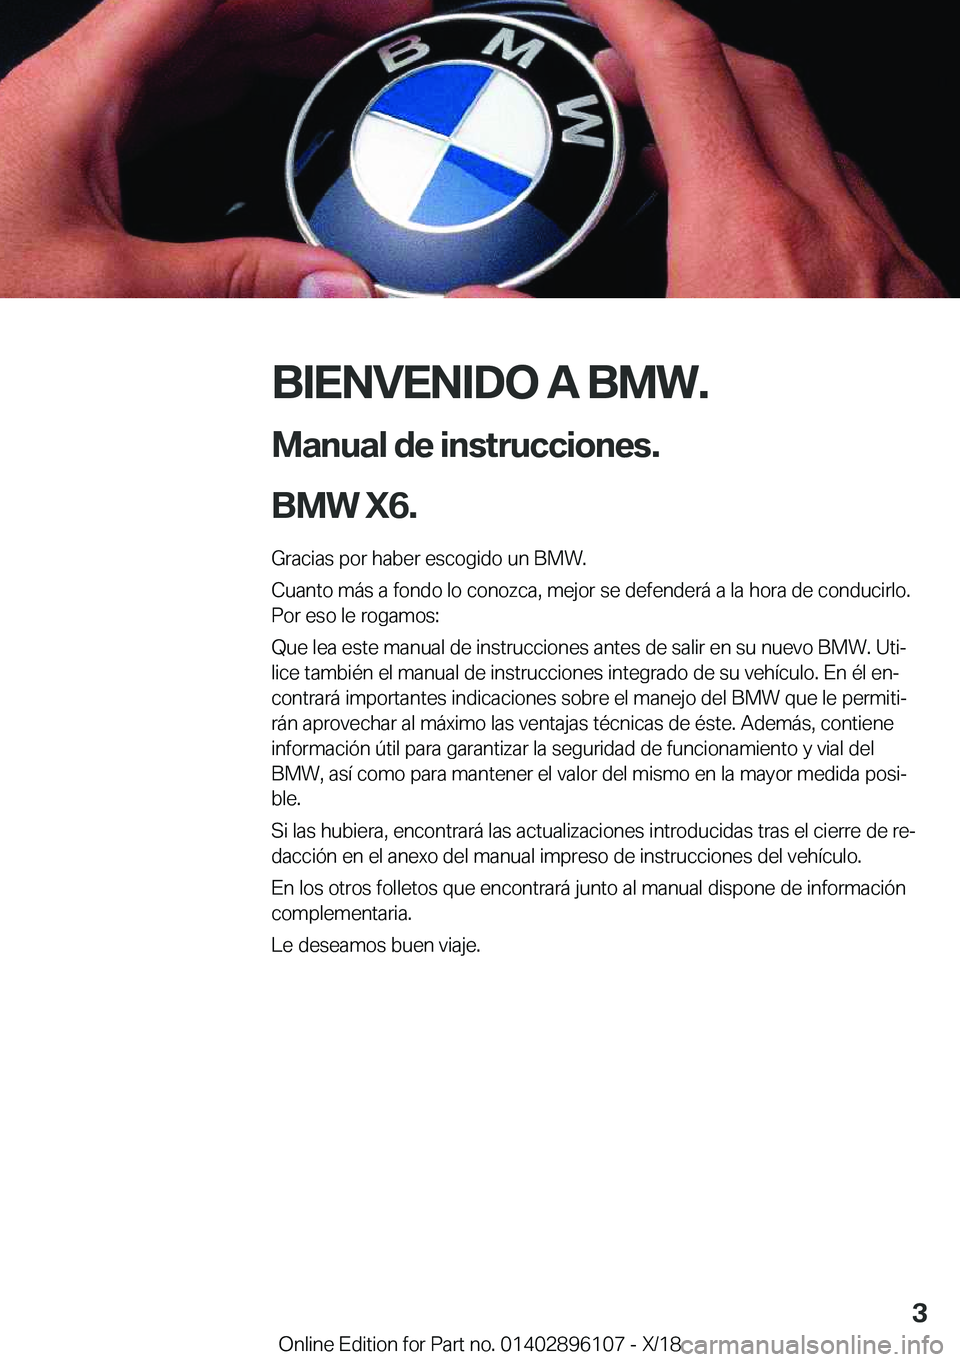 BMW X6 2019  Manuales de Empleo (in Spanish) �B�I�E�N�V�E�N�I�D�O��A��B�M�W�.
�M�a�n�u�a�l��d�e��i�n�s�t�r�u�c�c�i�o�n�e�s�.
�B�M�W��X�6�. �G�r�a�c�i�a�s��p�o�r��h�a�b�e�r��e�s�c�o�g�i�d�o��u�n��B�M�W�.�C�u�a�n�t�o��m�